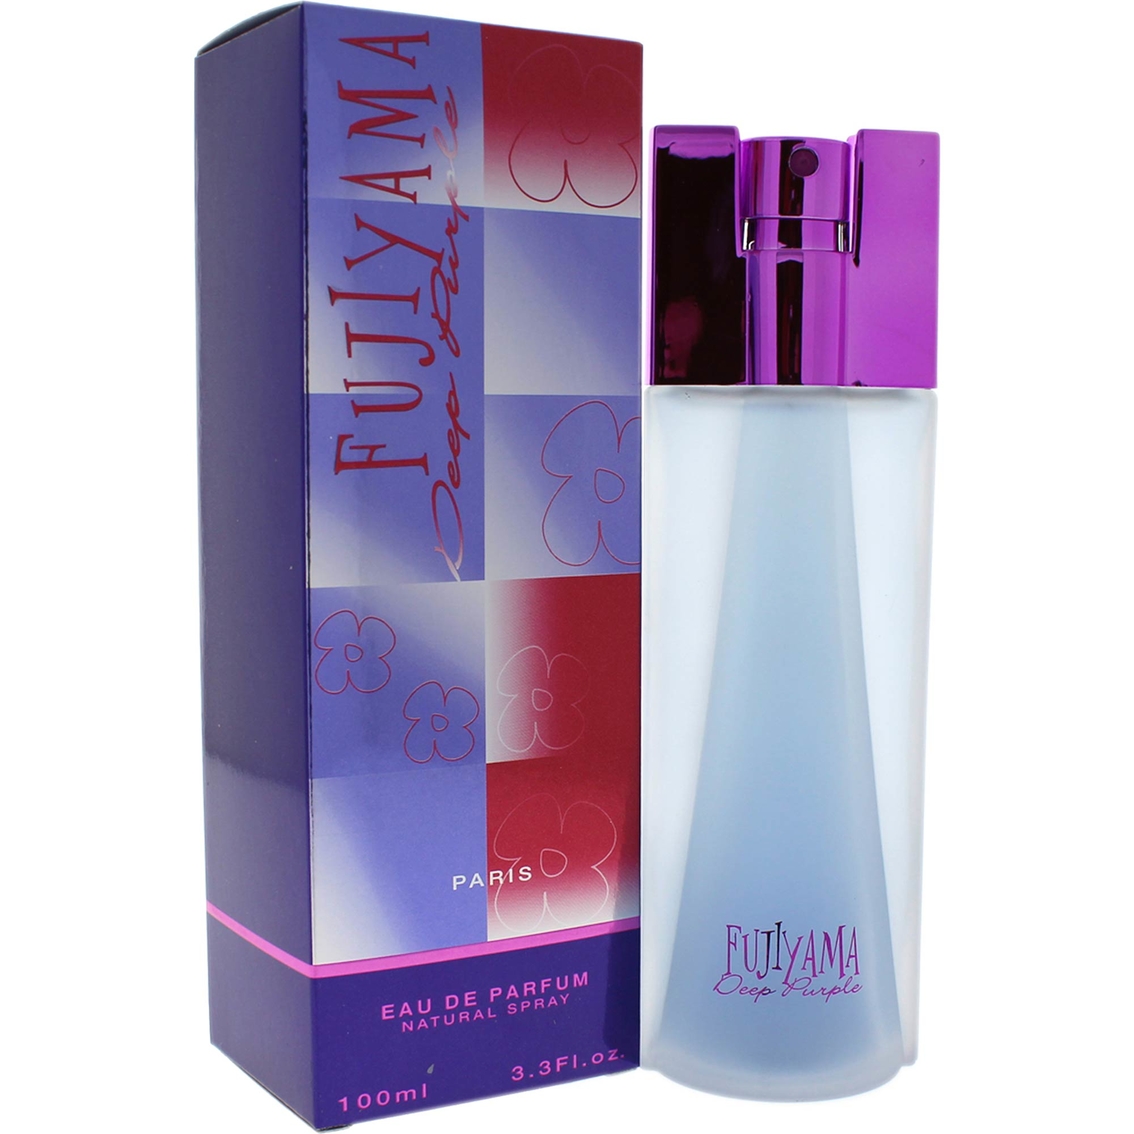 Fujiyama Deep Purple by Succes De Paris for Women Eau De Parfum 3.3 oz. Spray - Image 2 of 2